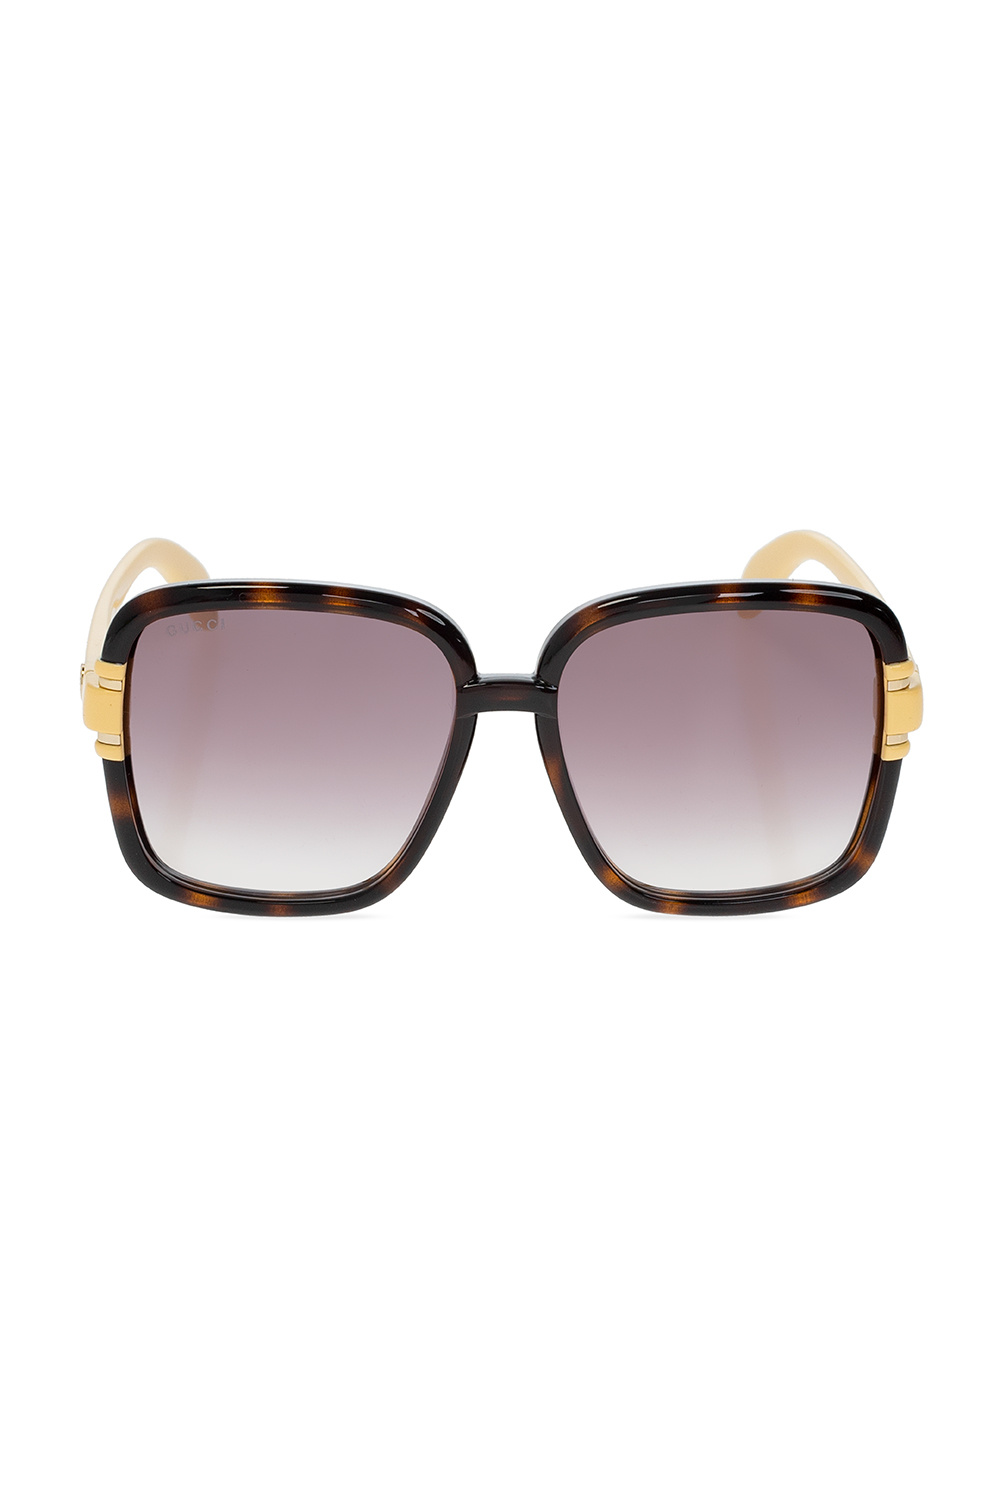 Gucci Linda Farrow Olivia round-frame sunglasses